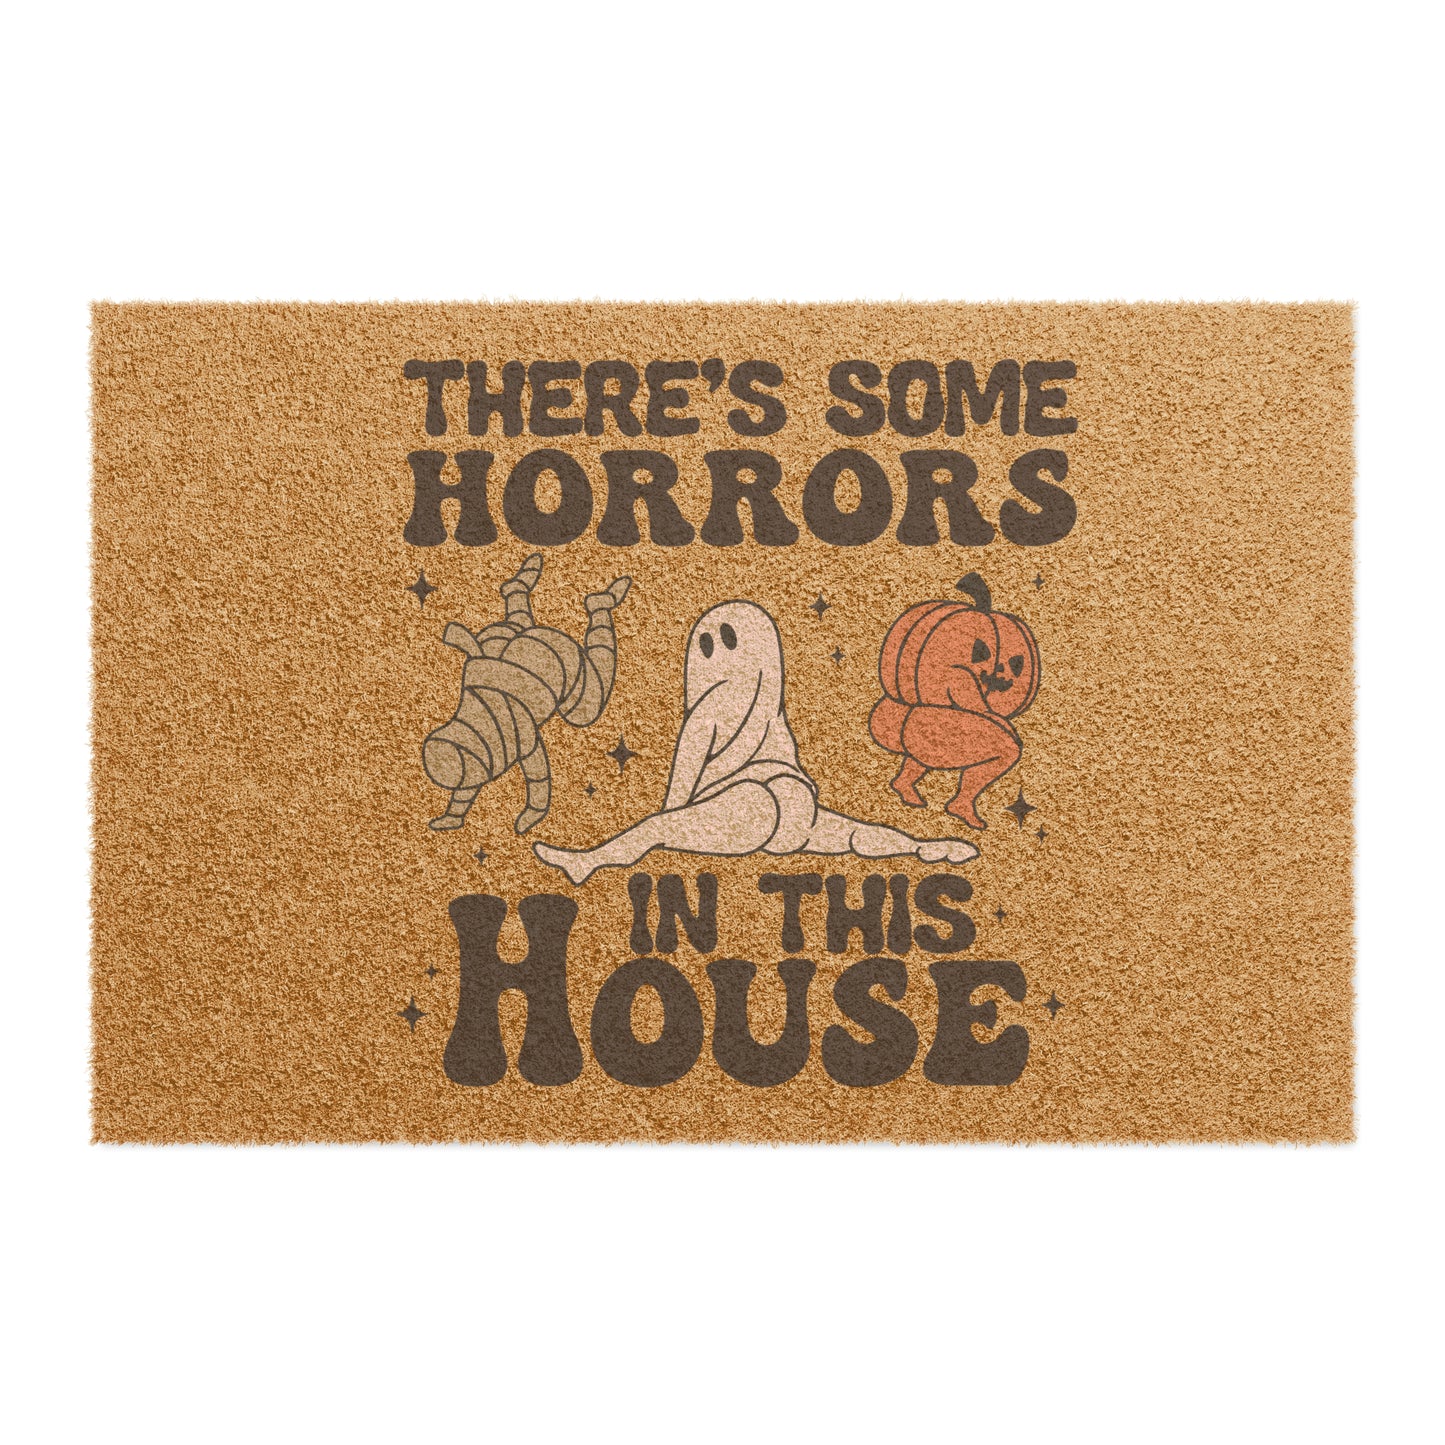 Halloween Doormat Horrors in this House